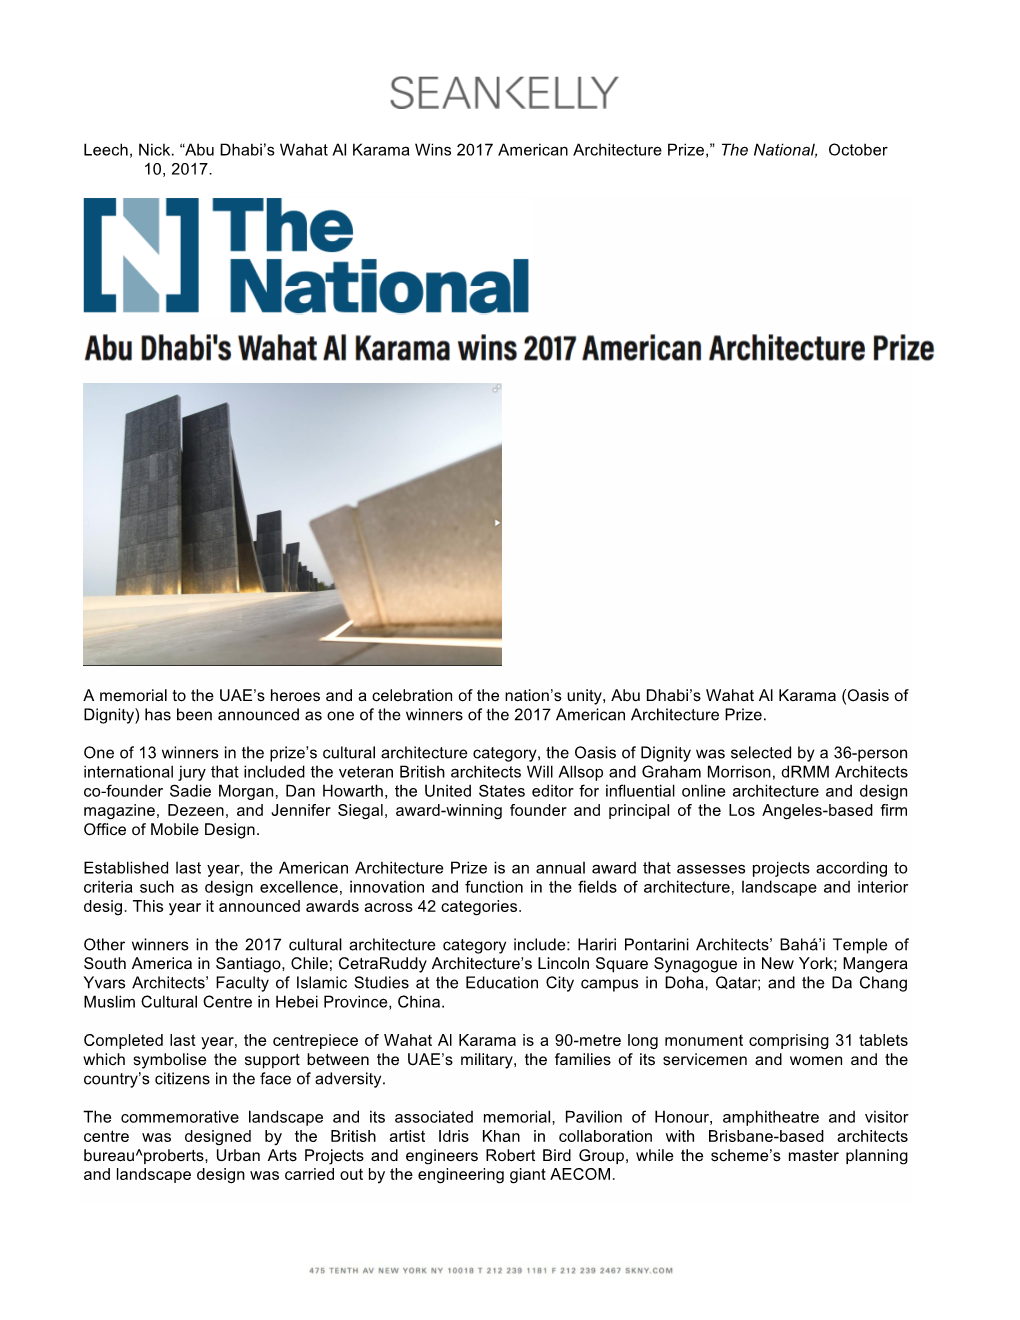 Abu Dhabi's Wahat Al Karama Wins 2017 American Architecture Prize